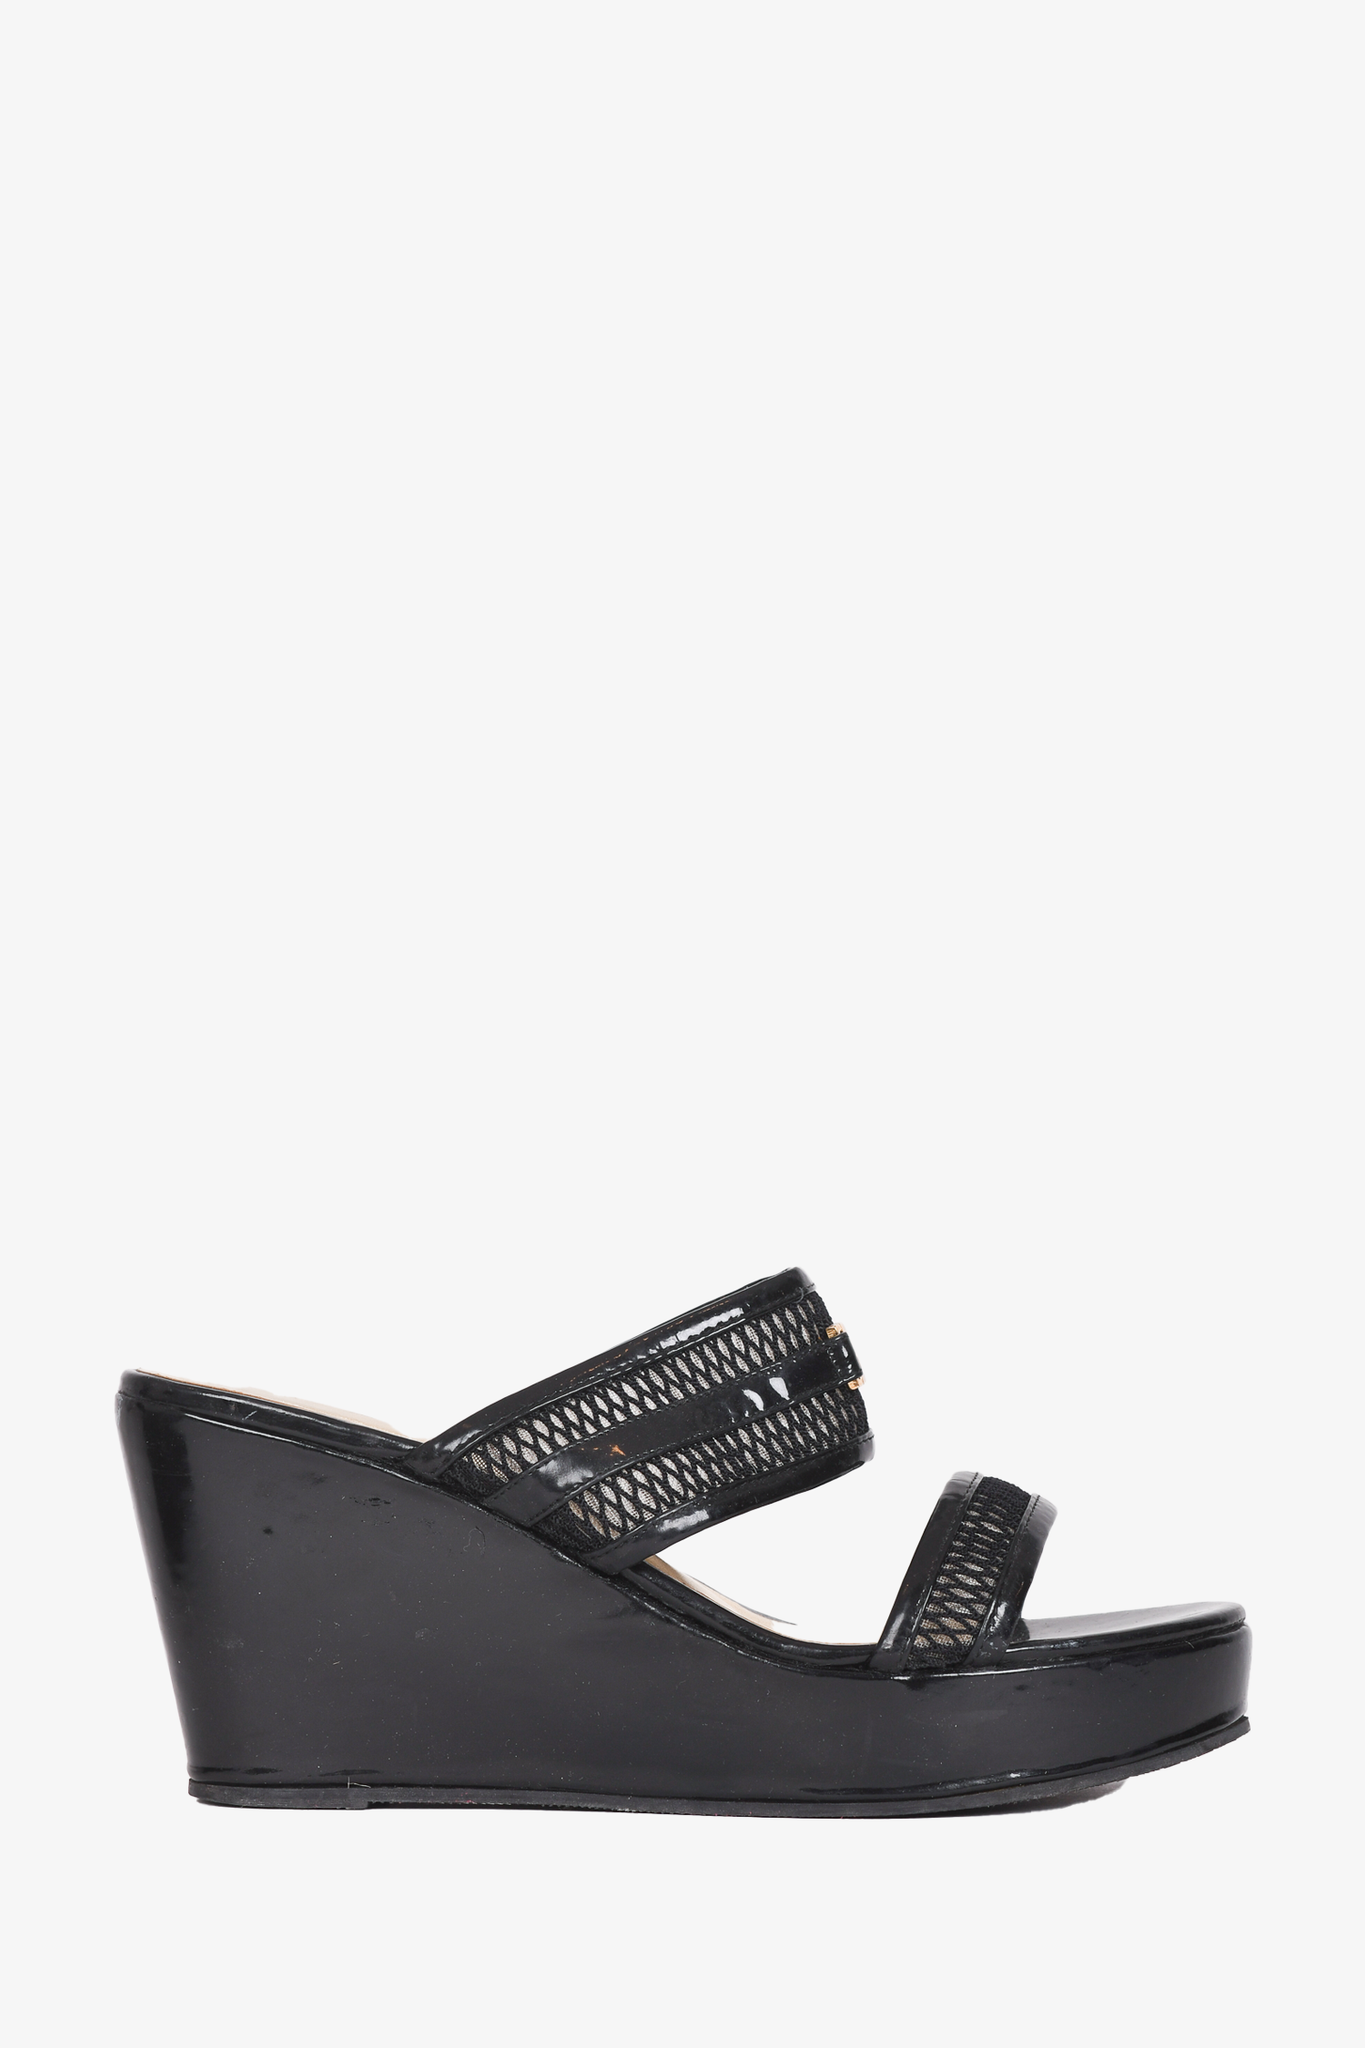 Dolce & Gabbana Black Double Strap "DG" Wedge Sandals Size 40